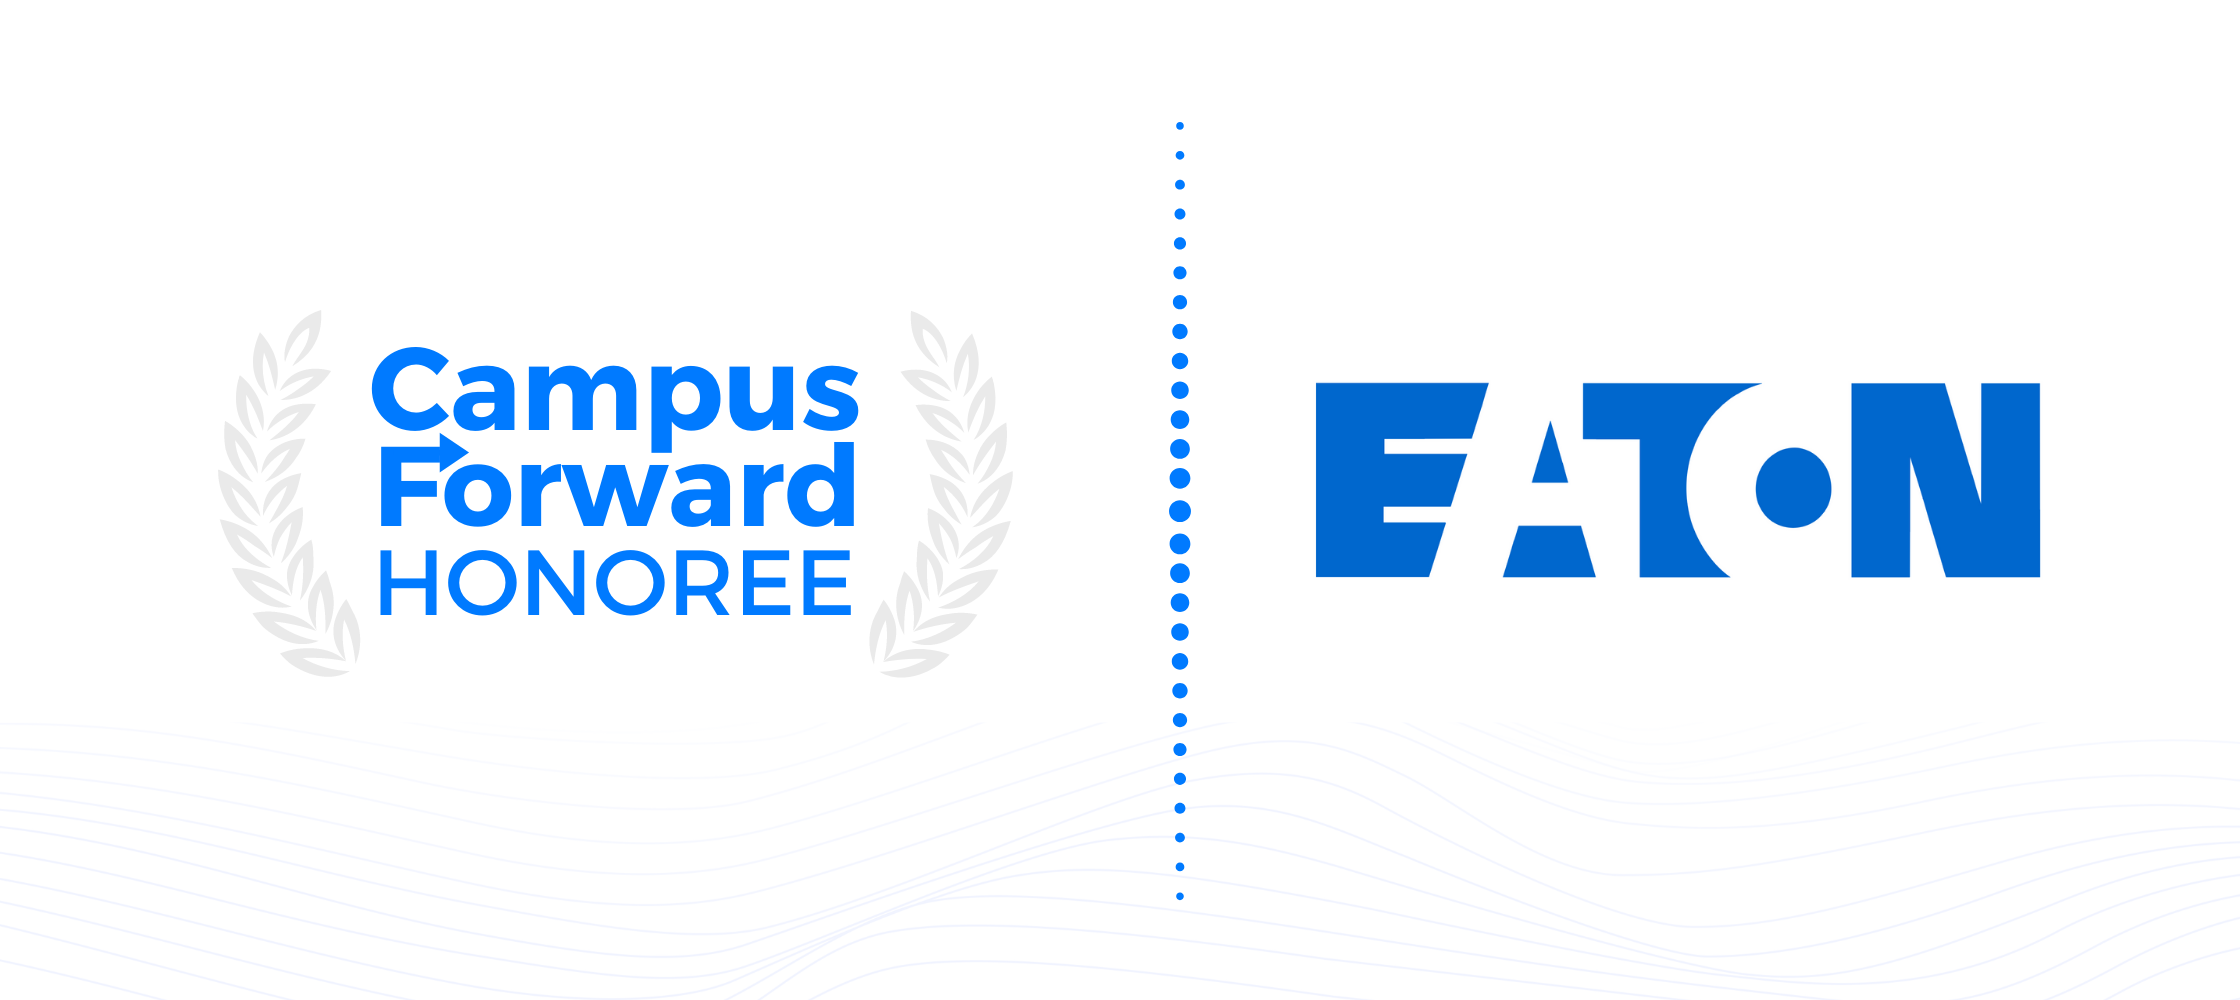 Campus Forward Honoree - Eaton